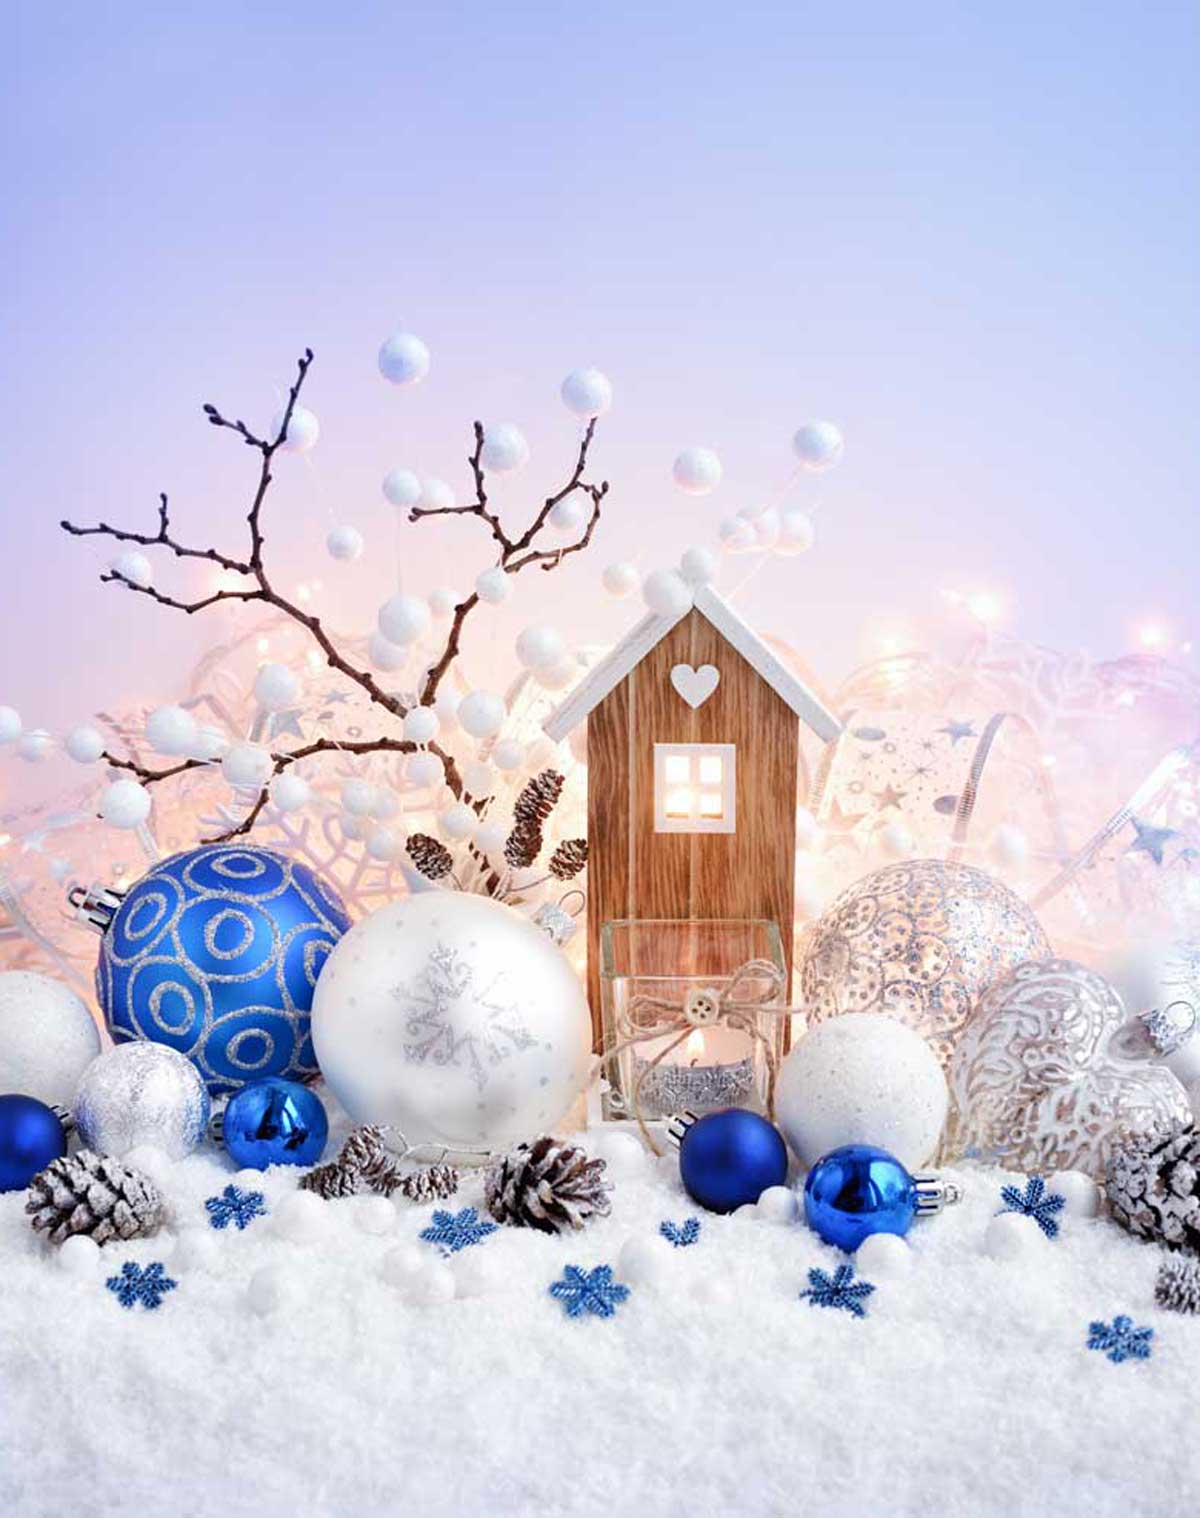 snow toy house